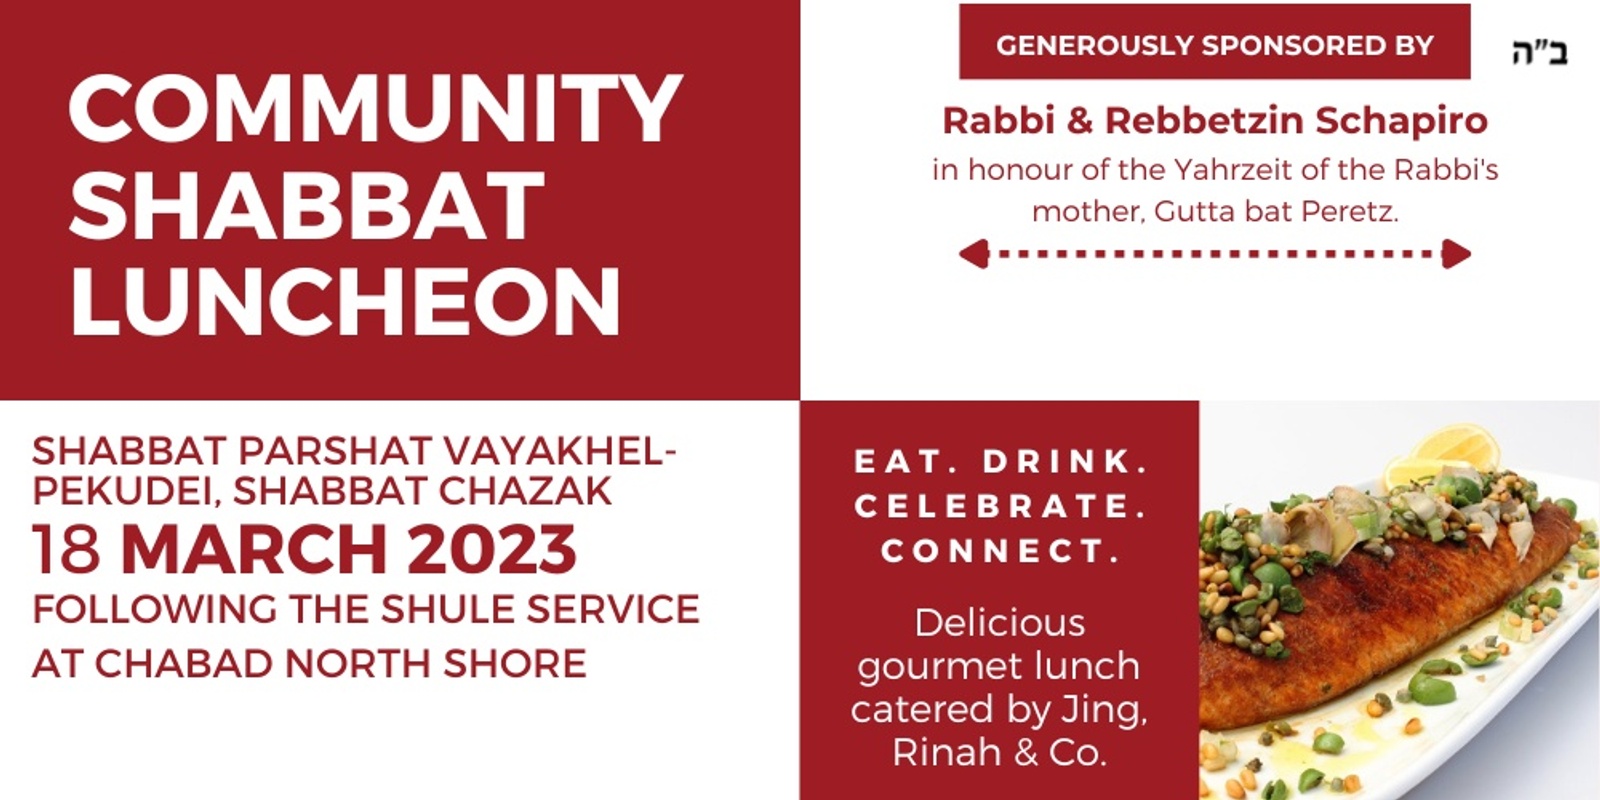 Shabbat Luncheon at Chabad